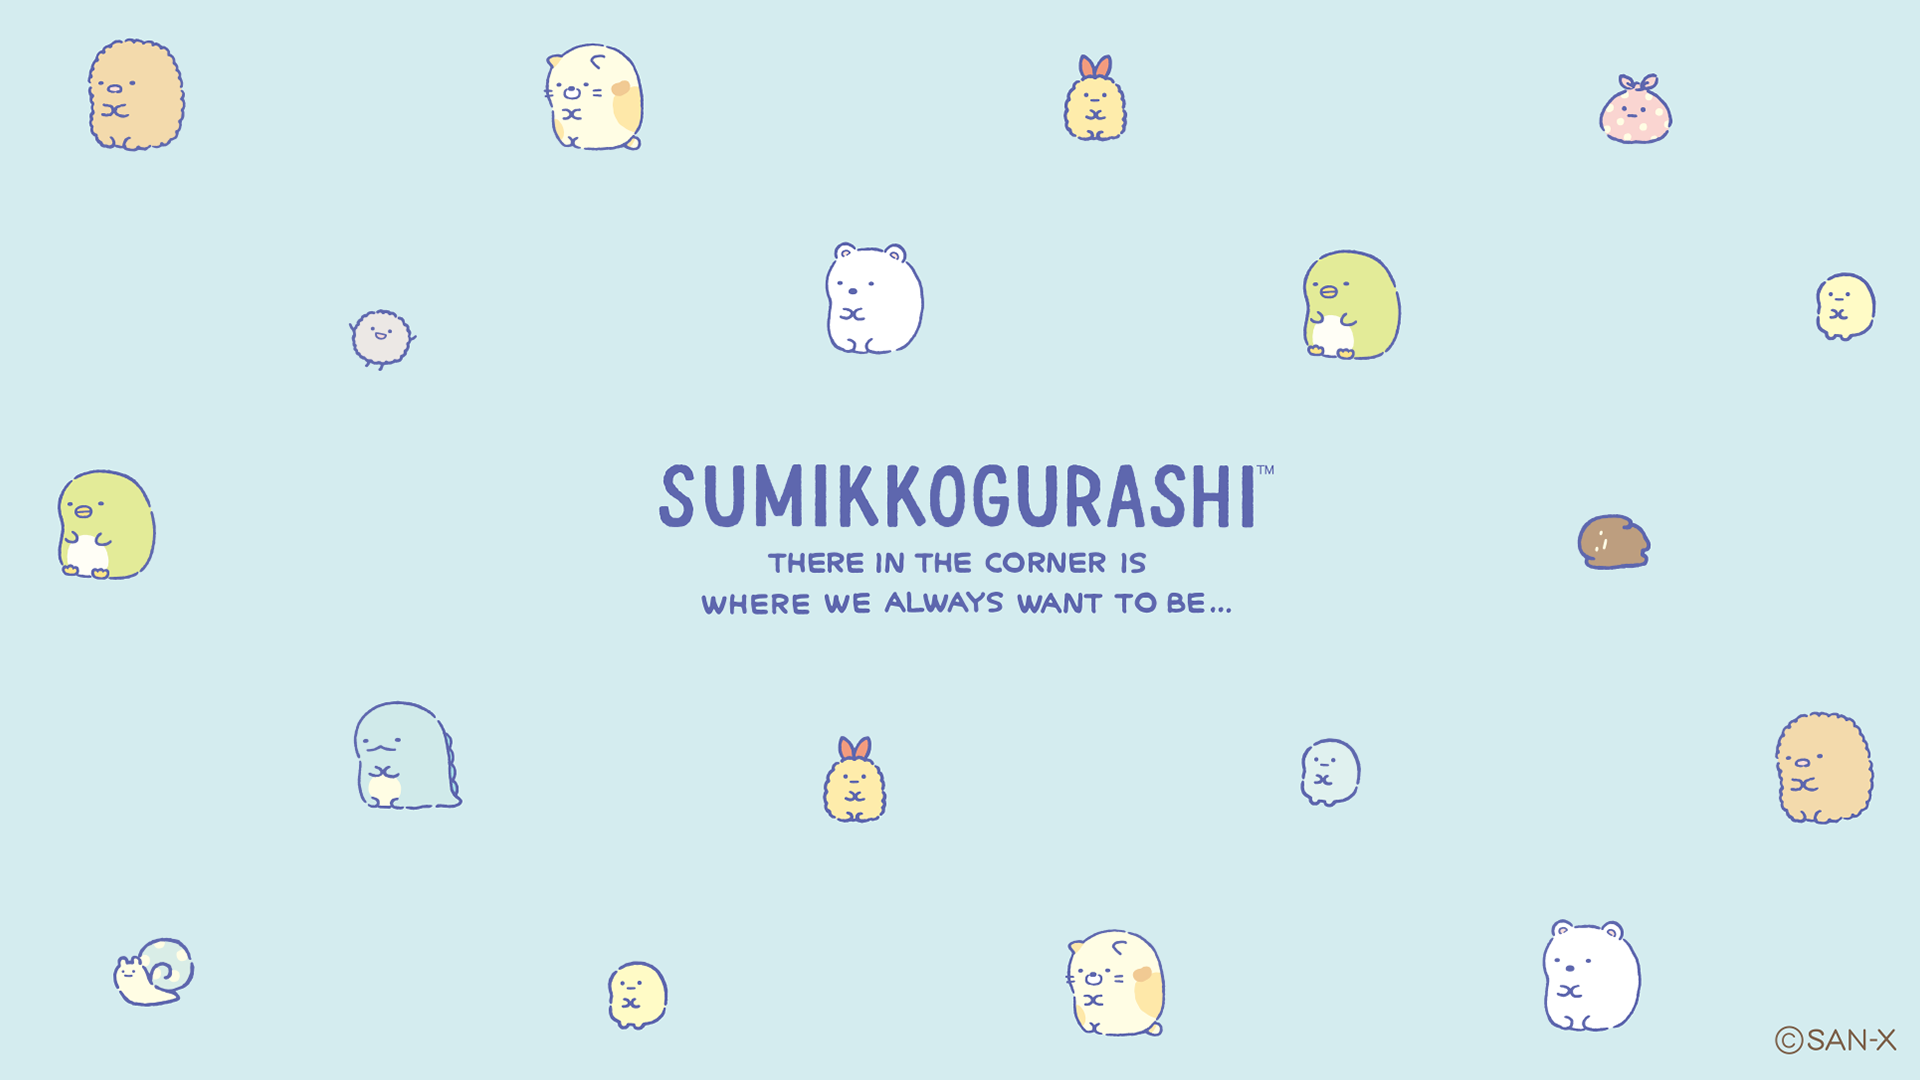 Awesome FREE Sumikkogurashi wallpaper!